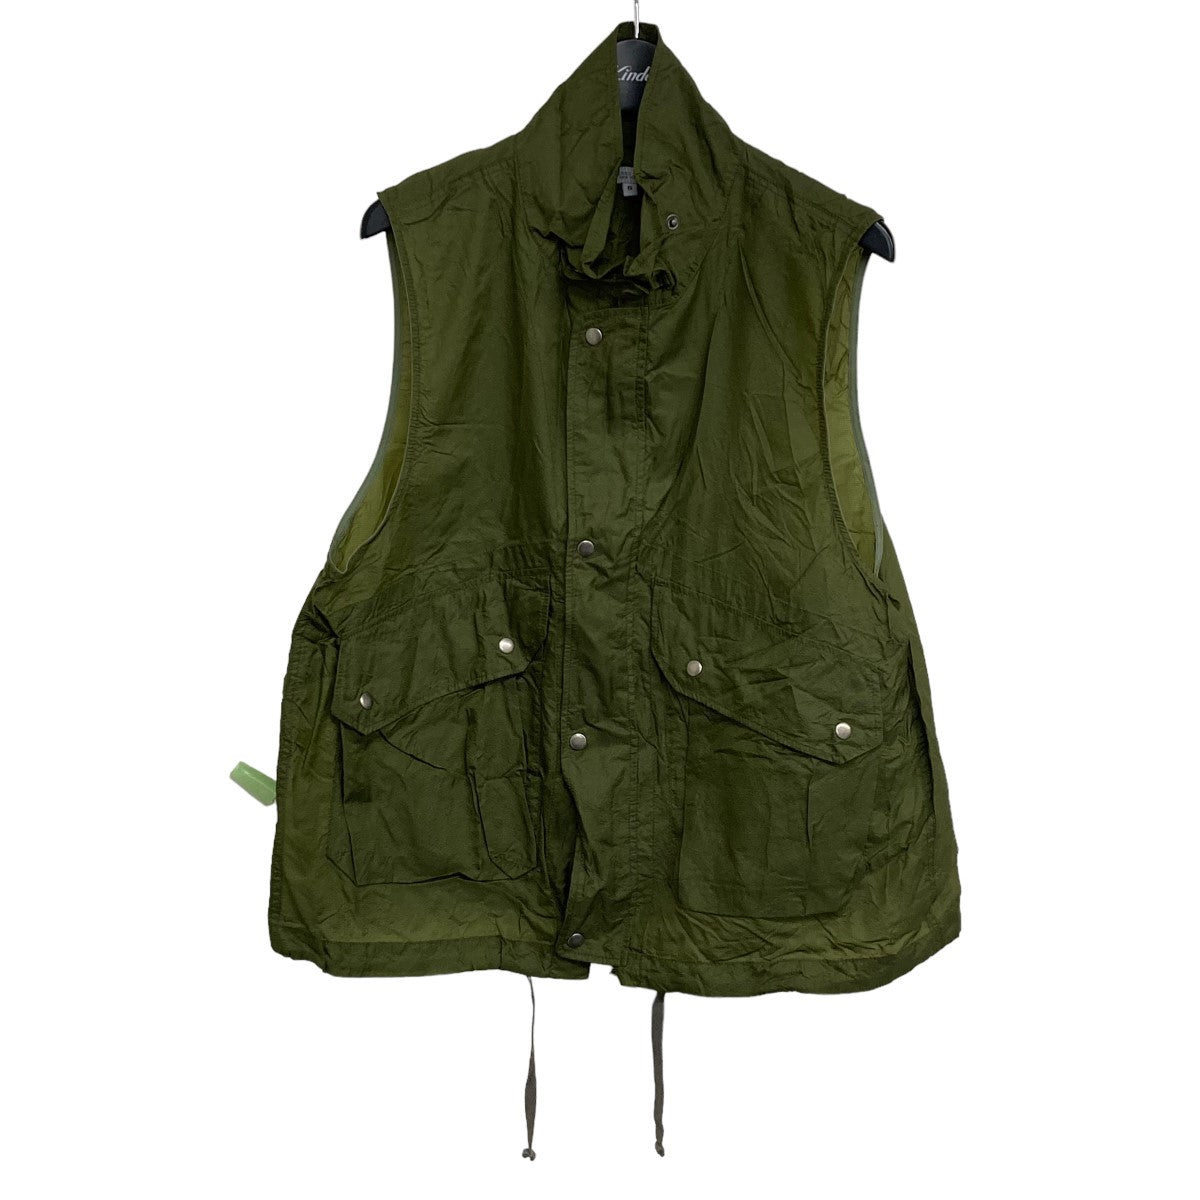 Engineered Garments(エンジニアードガーメンツ) 「Field vest nylon 